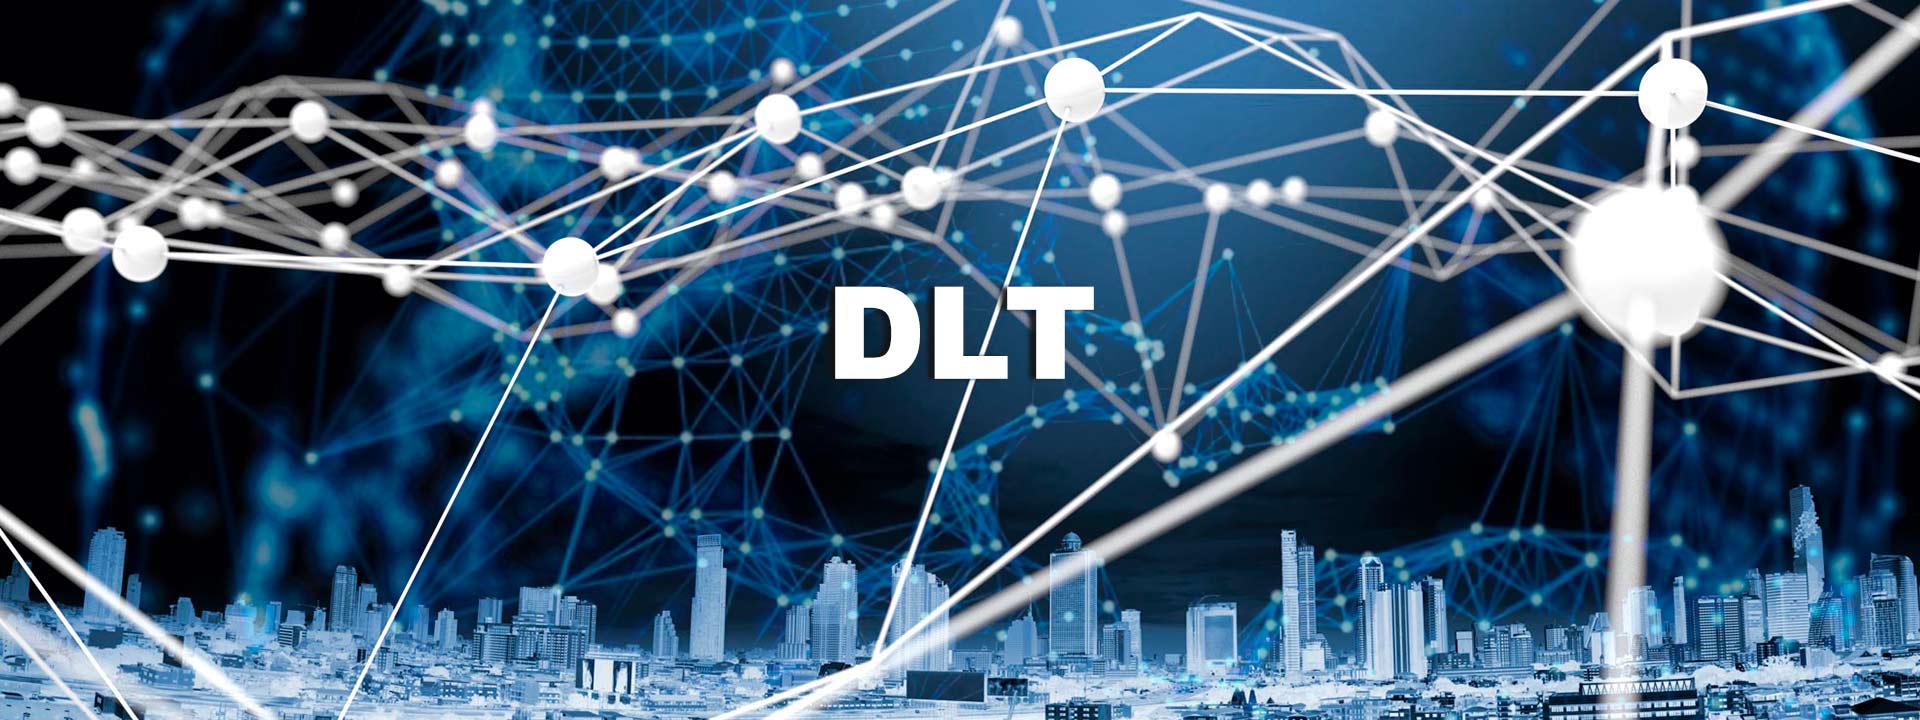 DLT - Distributed Ledger Technology - Artech Digital